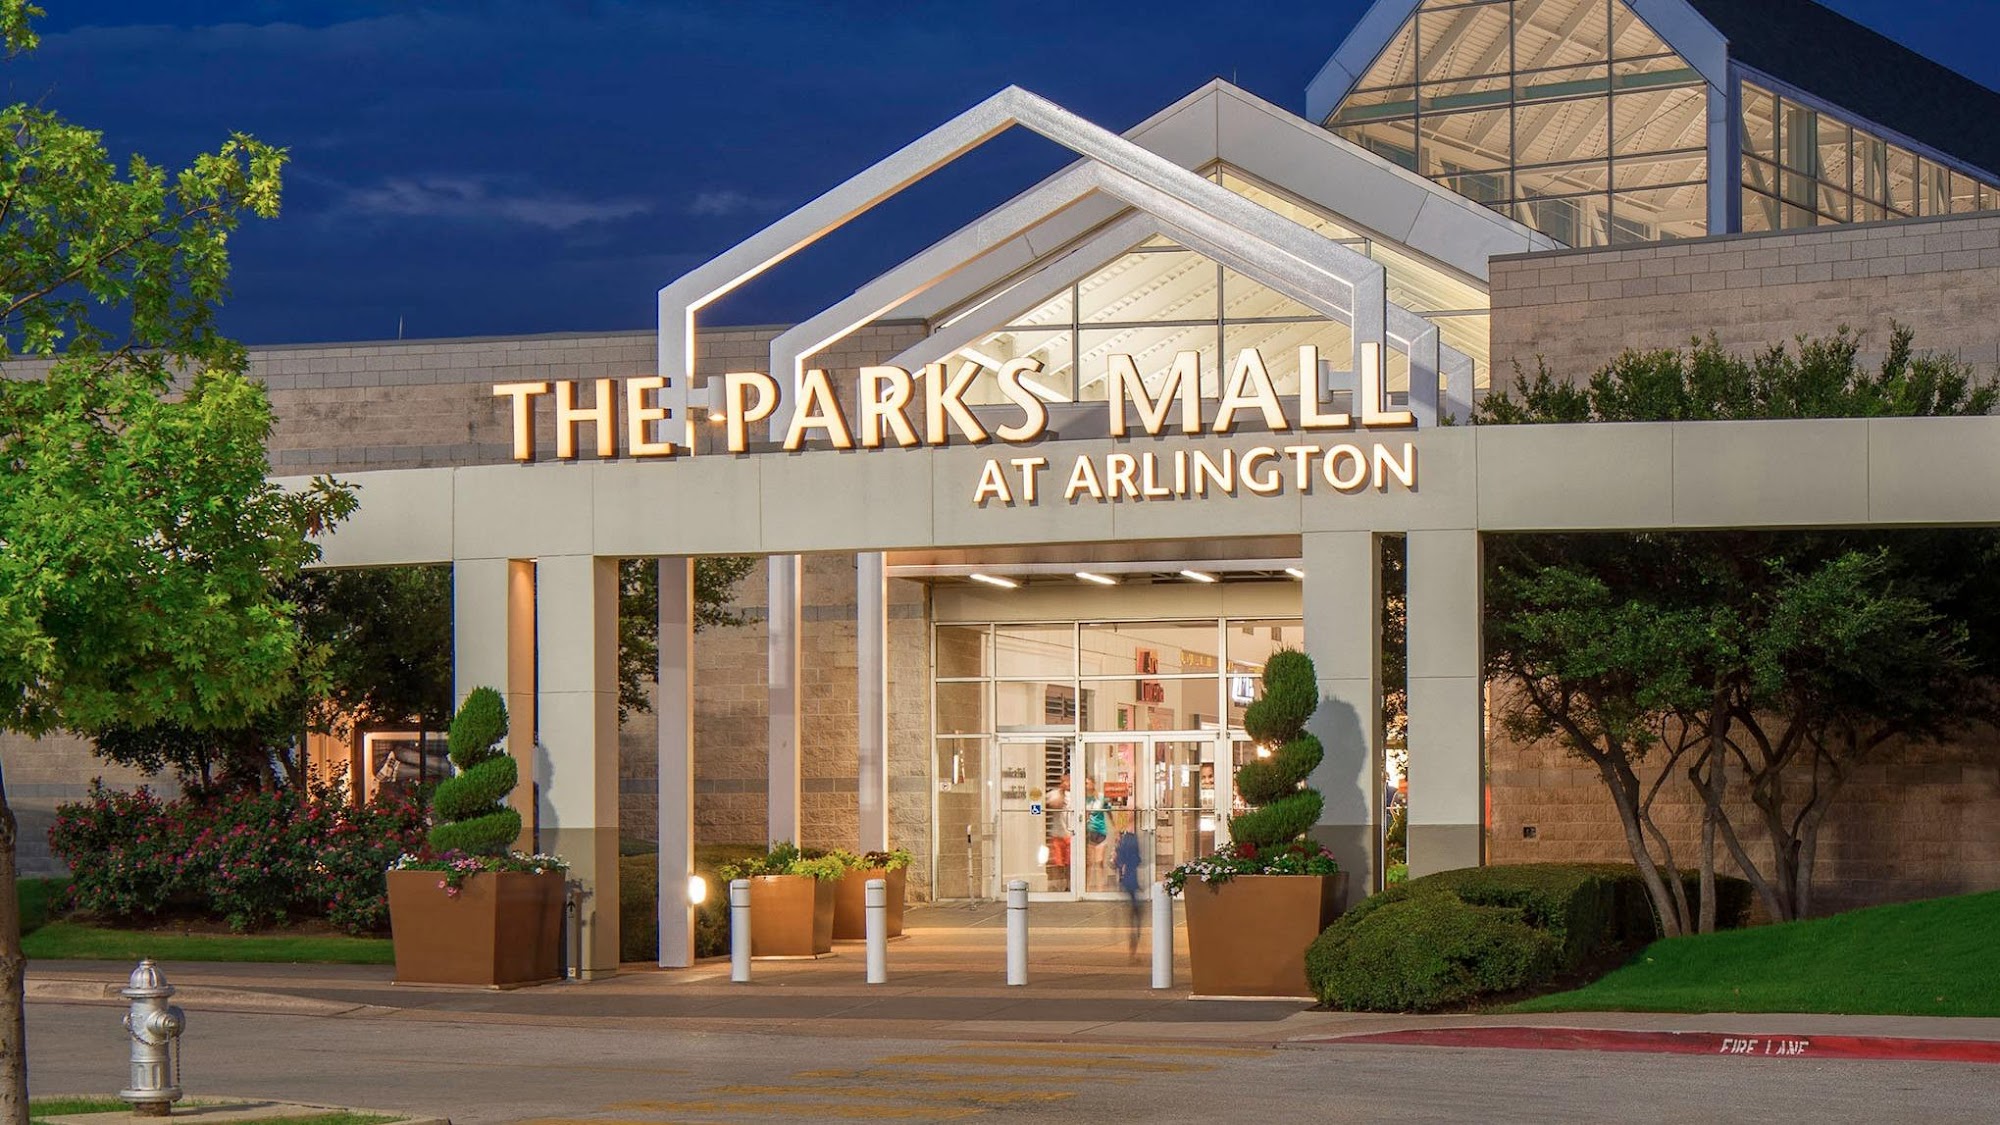 The Parks Mall at Arlington